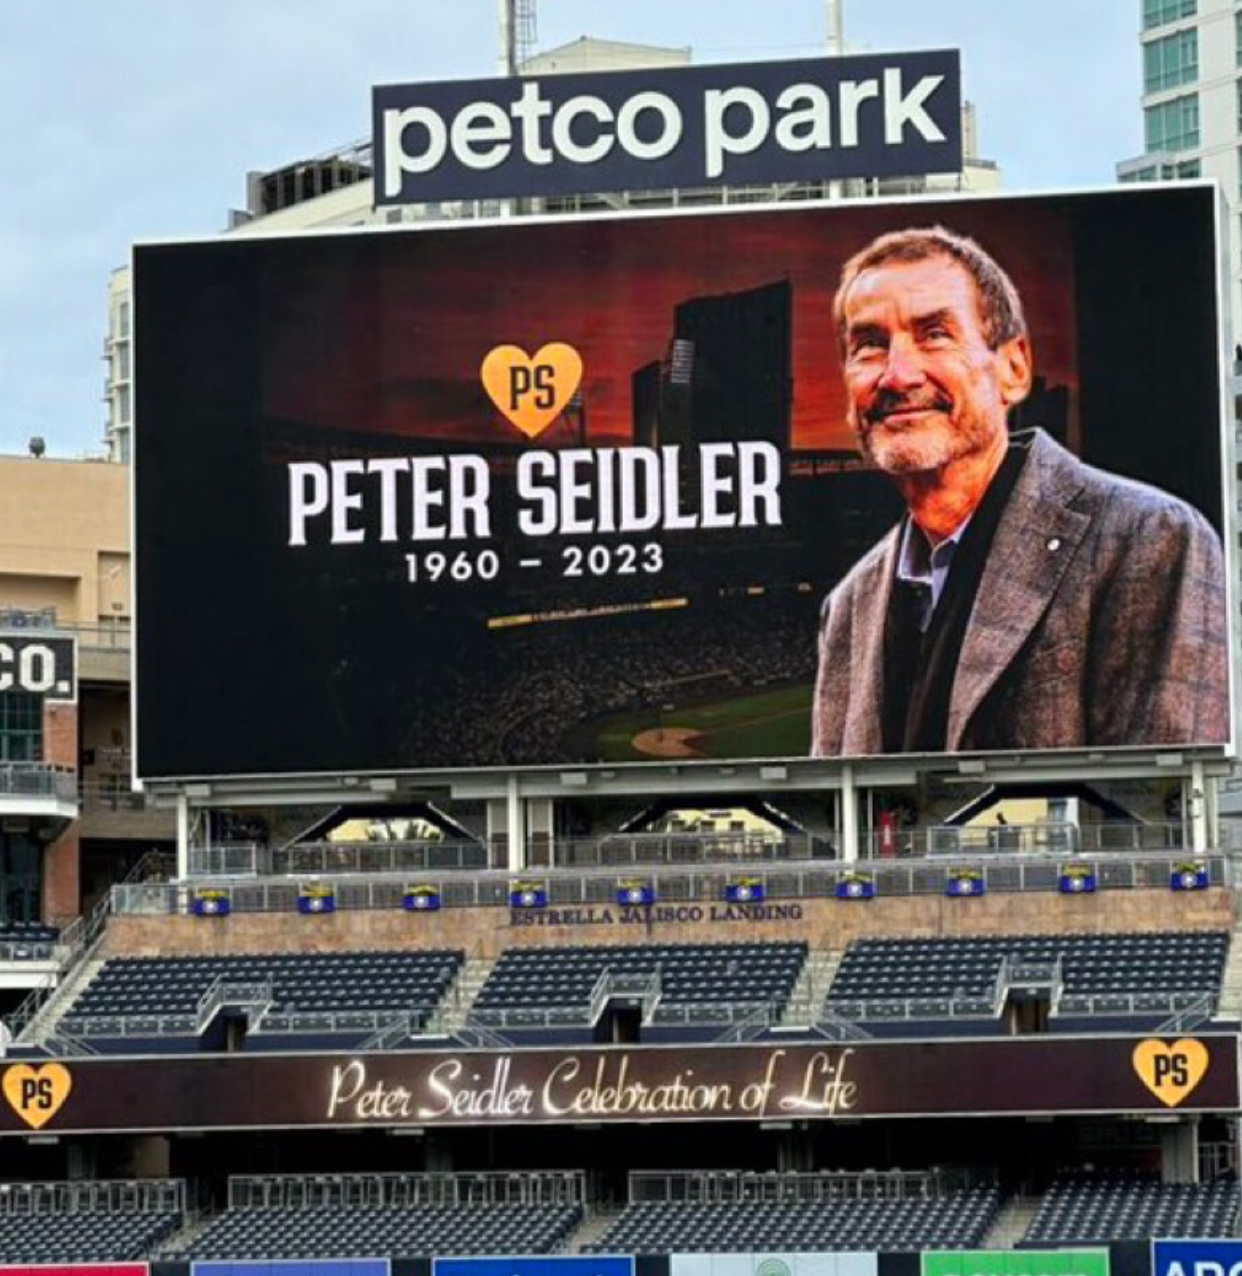 Peter Seidler Celebration of Life